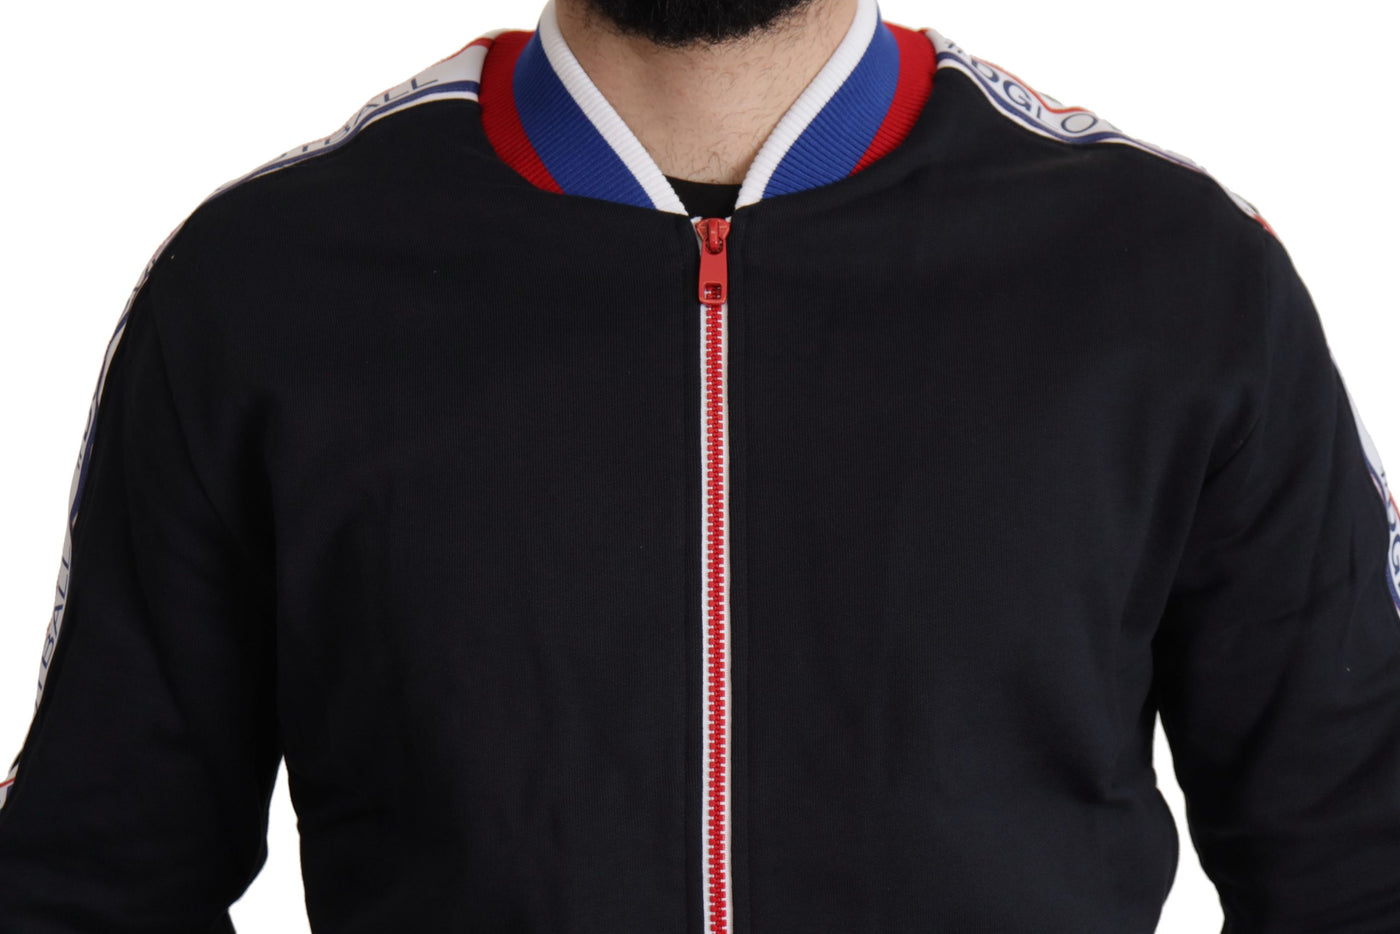 Blue MOSCOW Striped Zipper Jacket Sweater